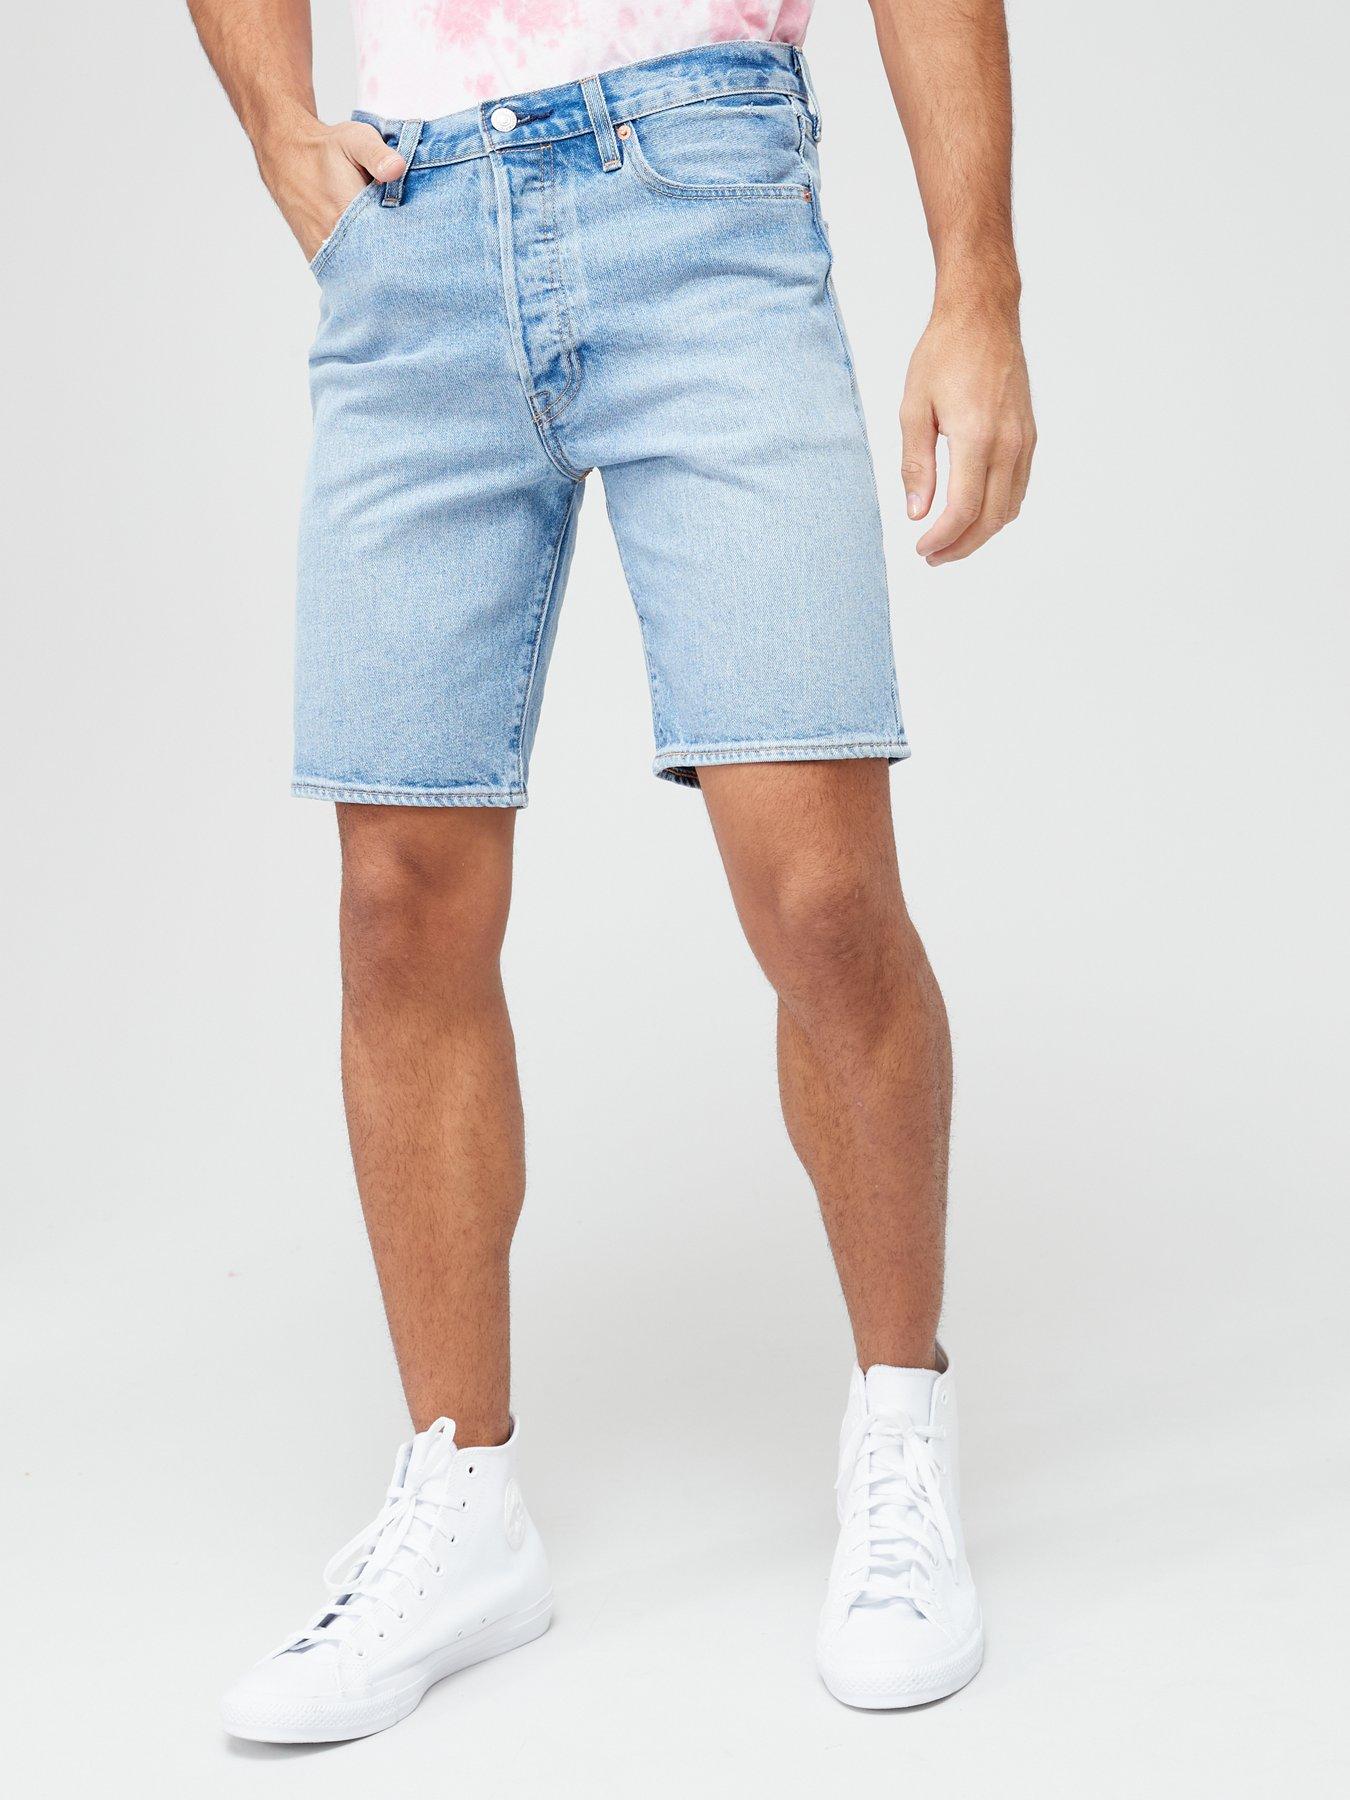 Mens Shorts | Cargo Shorts for Men 